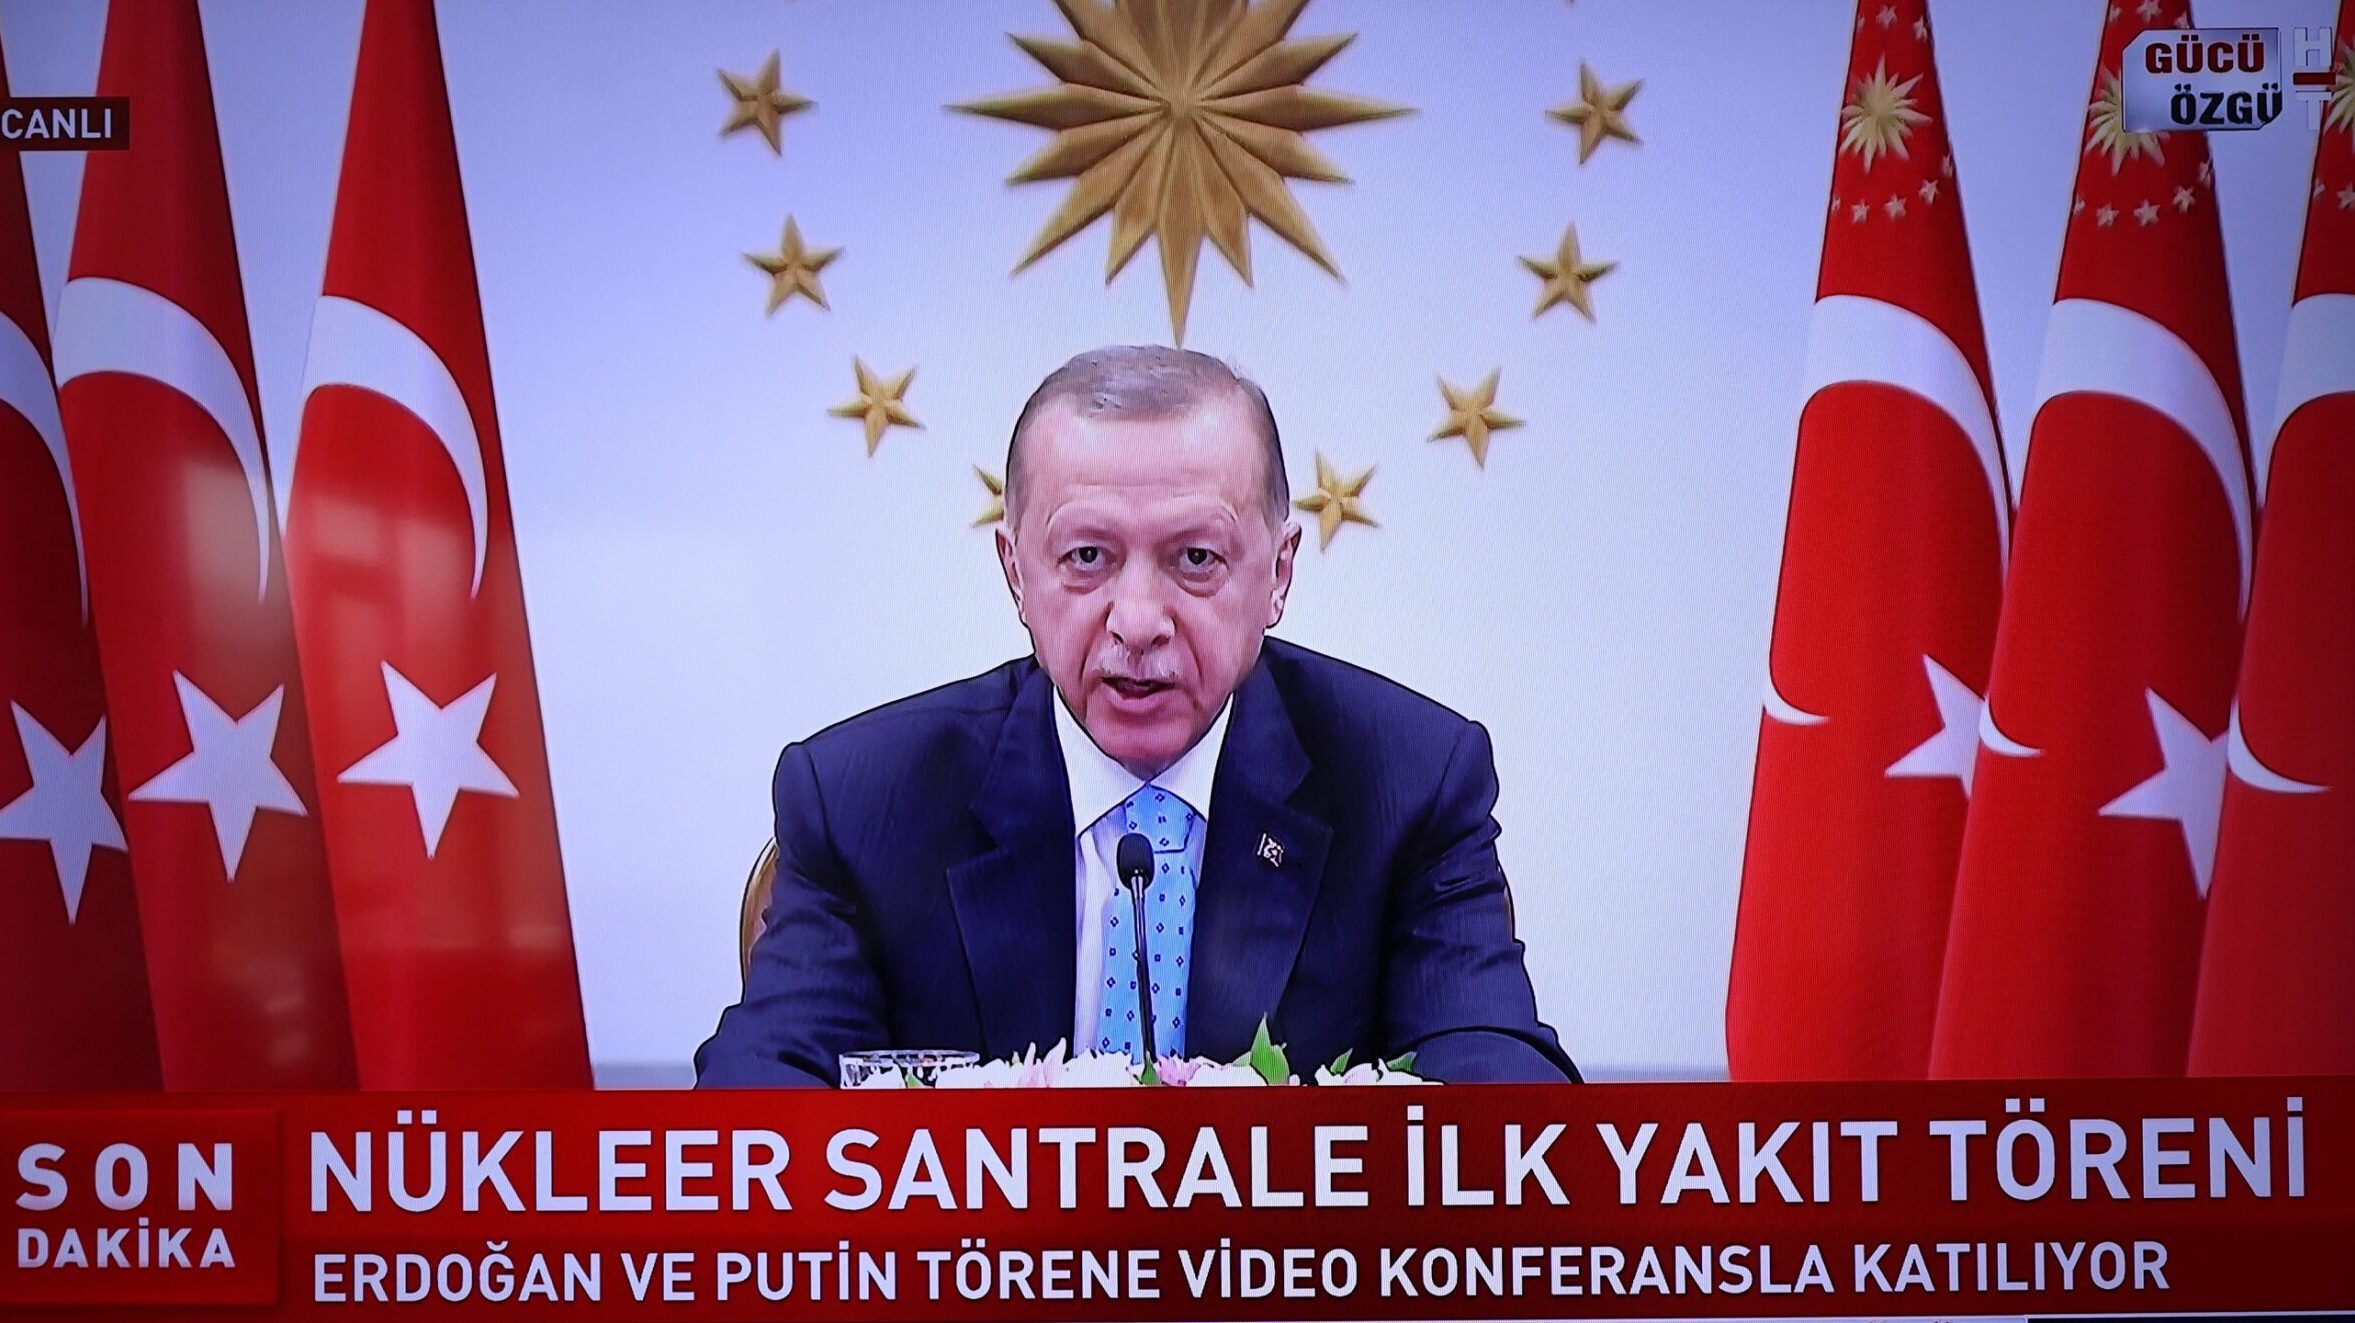 Erdoğan Appears With Putin Via Video for Nuclear Plant Inauguration Amid Health Concerns